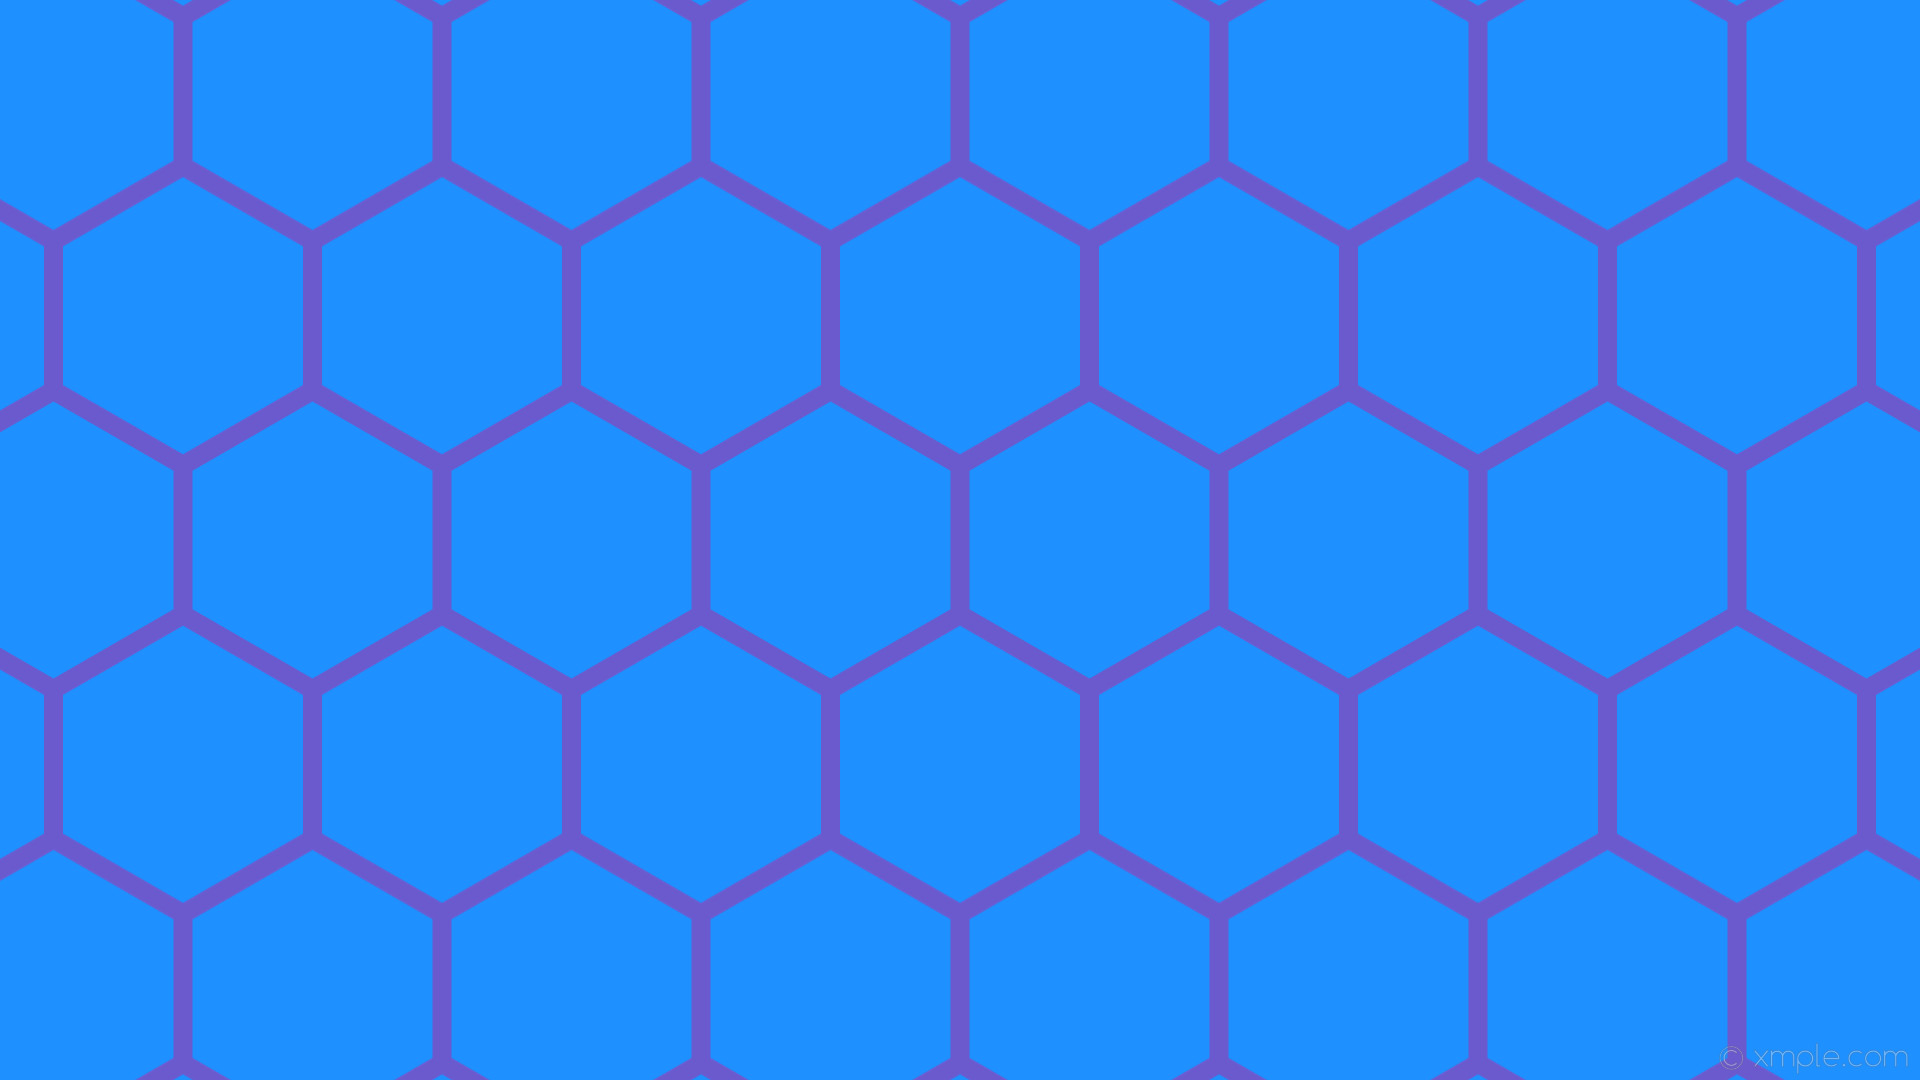 1920x1080 wallpaper blue honeycomb beehive hexagon purple dodger blue slate blue  #1e90ff #6a5acd 0Â°